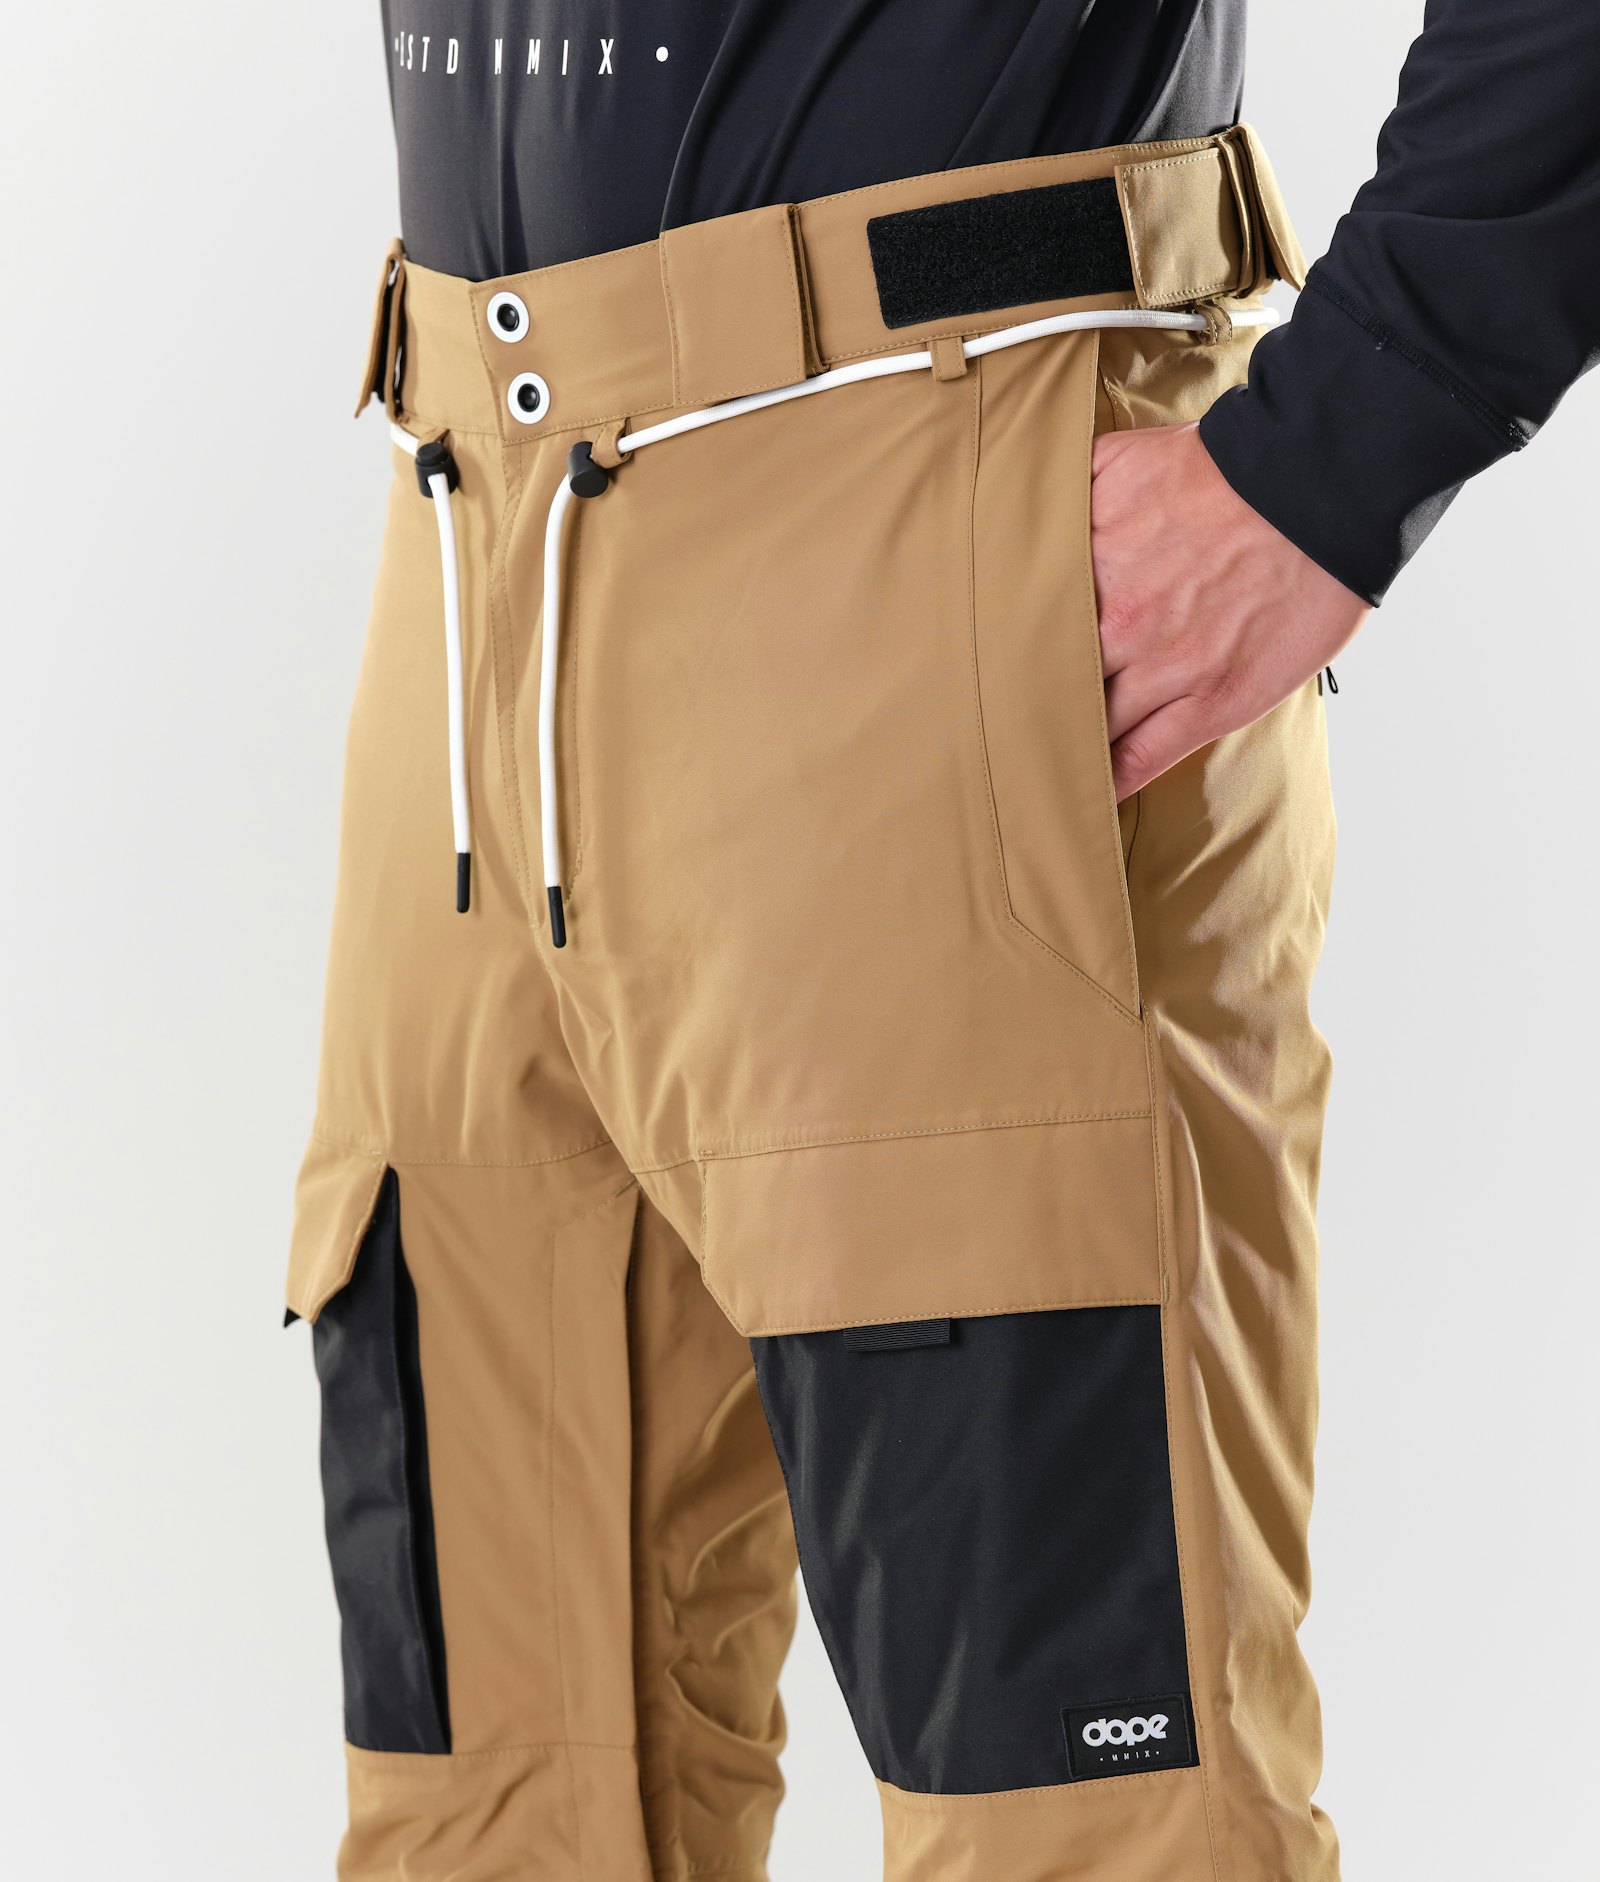 Poise Pantalon de Ski Homme Gold/Black